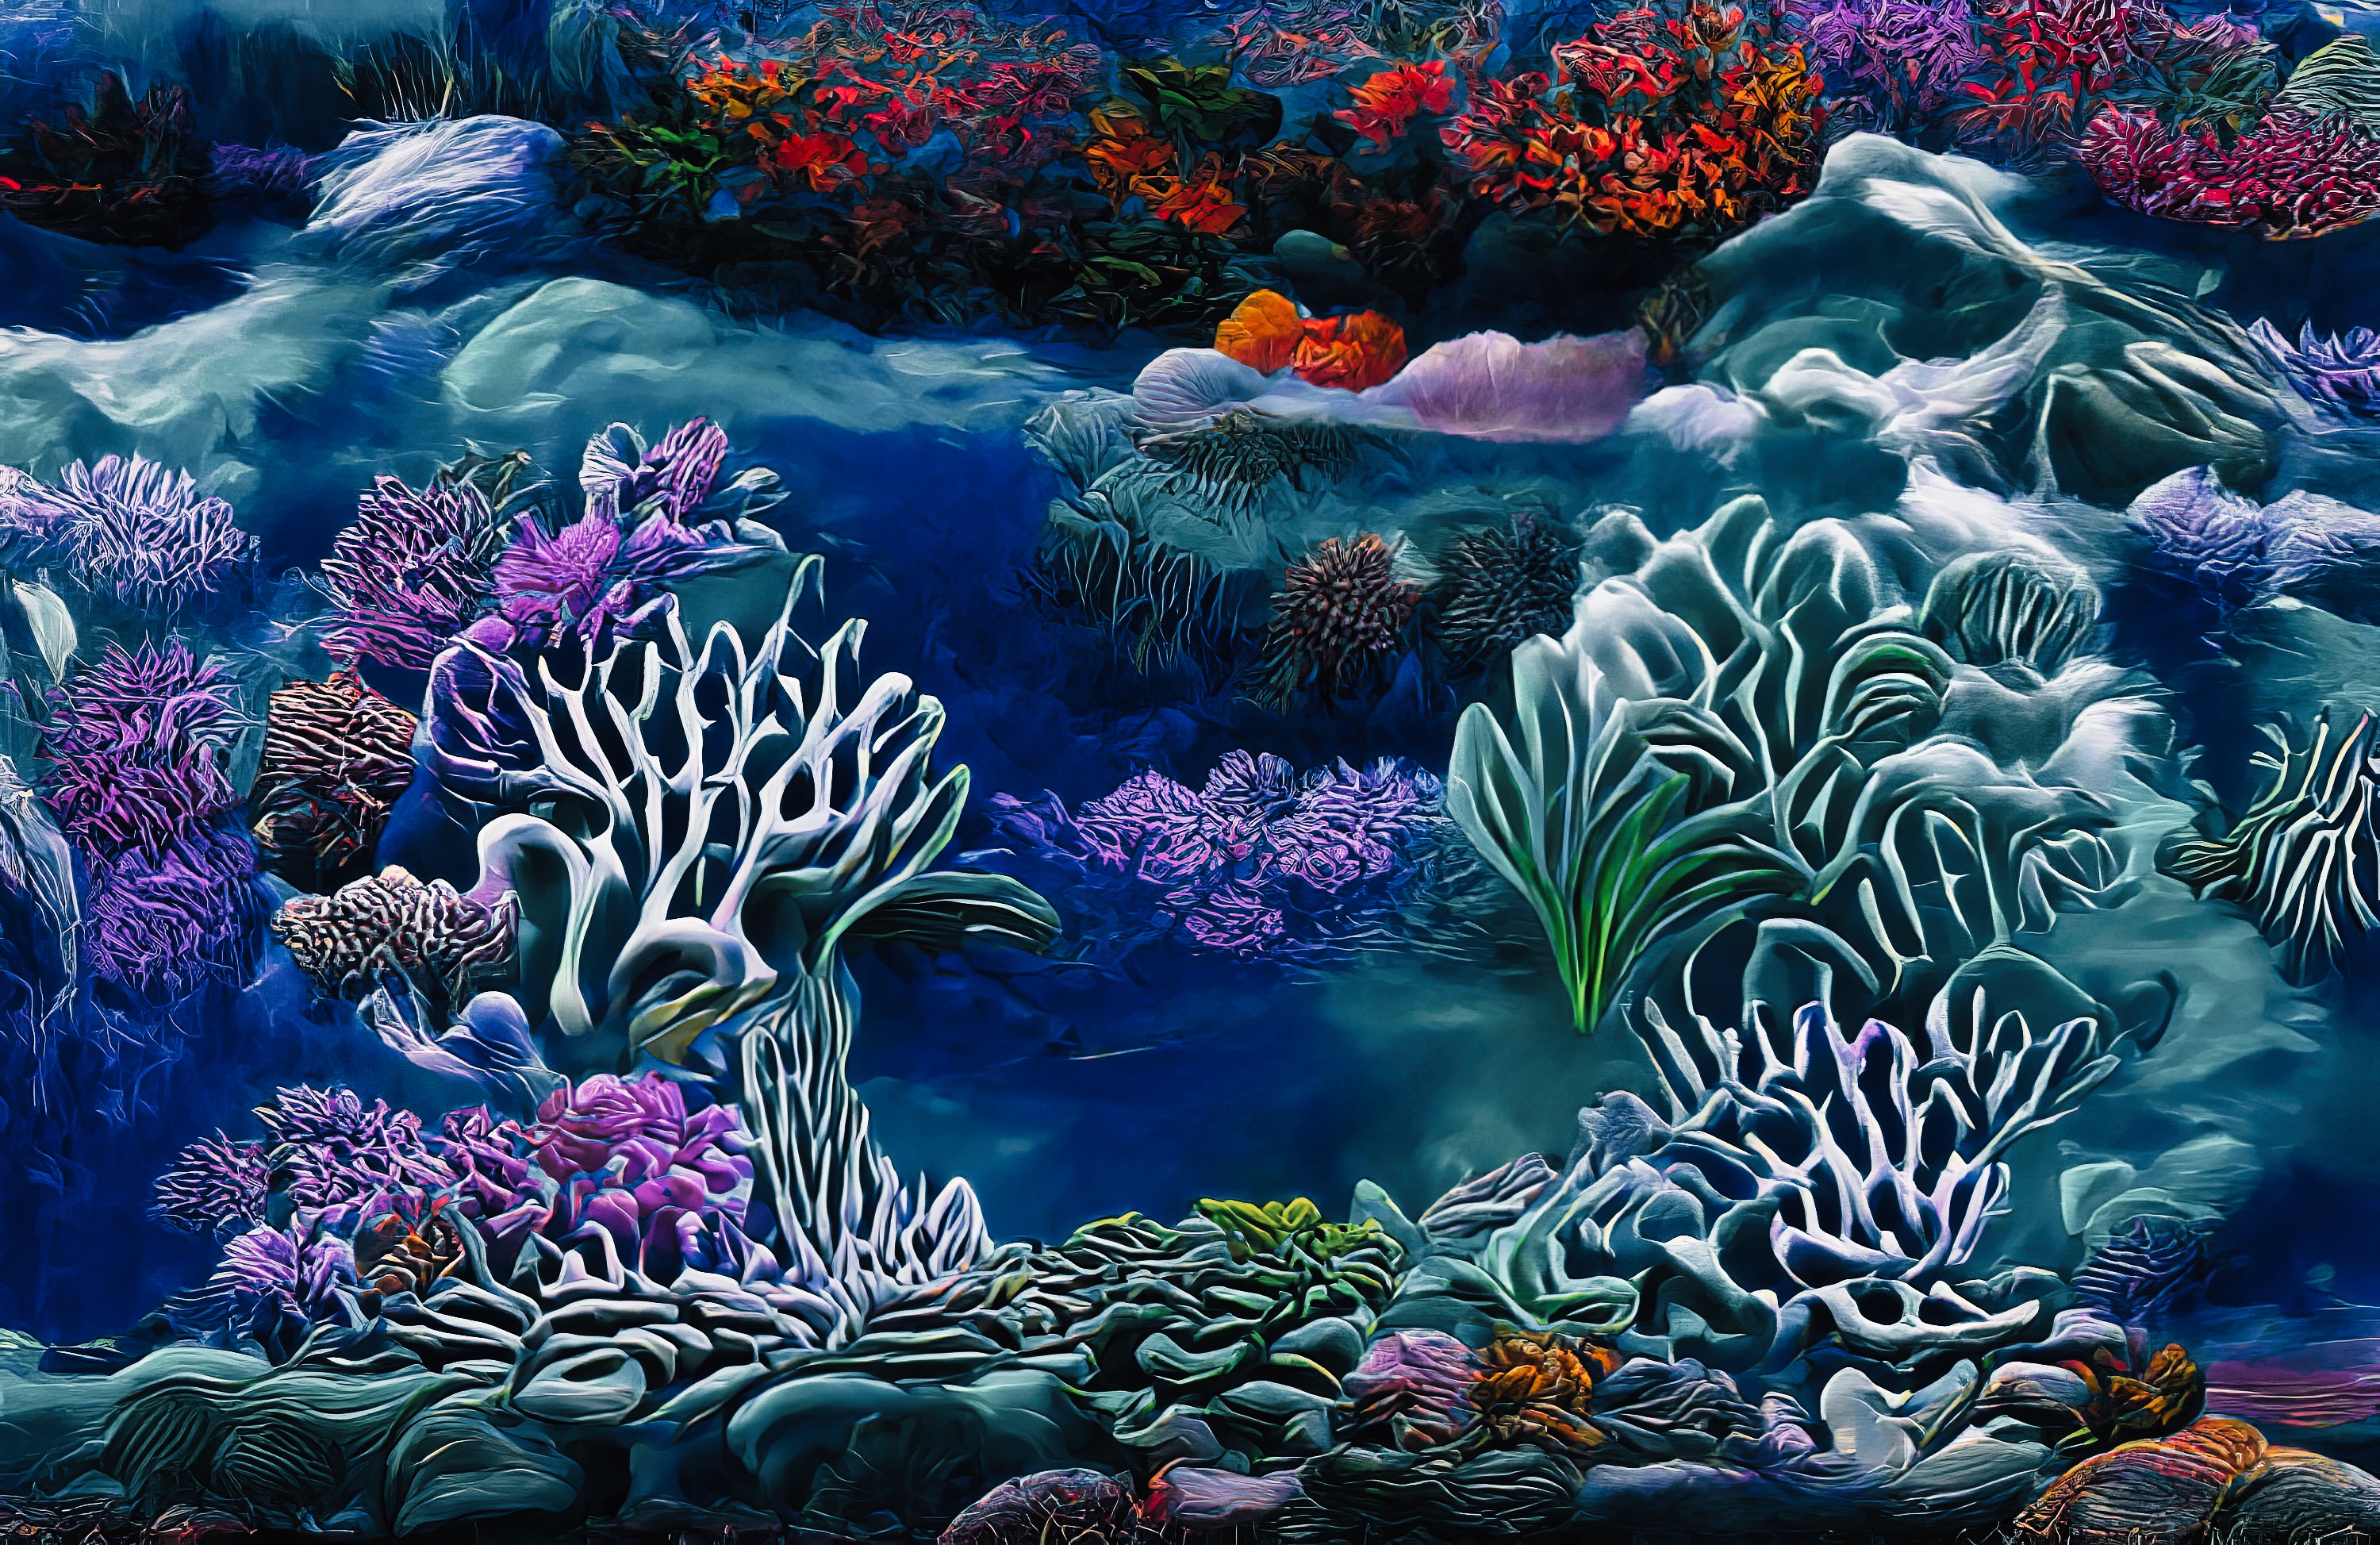 The Corals Genesis #85